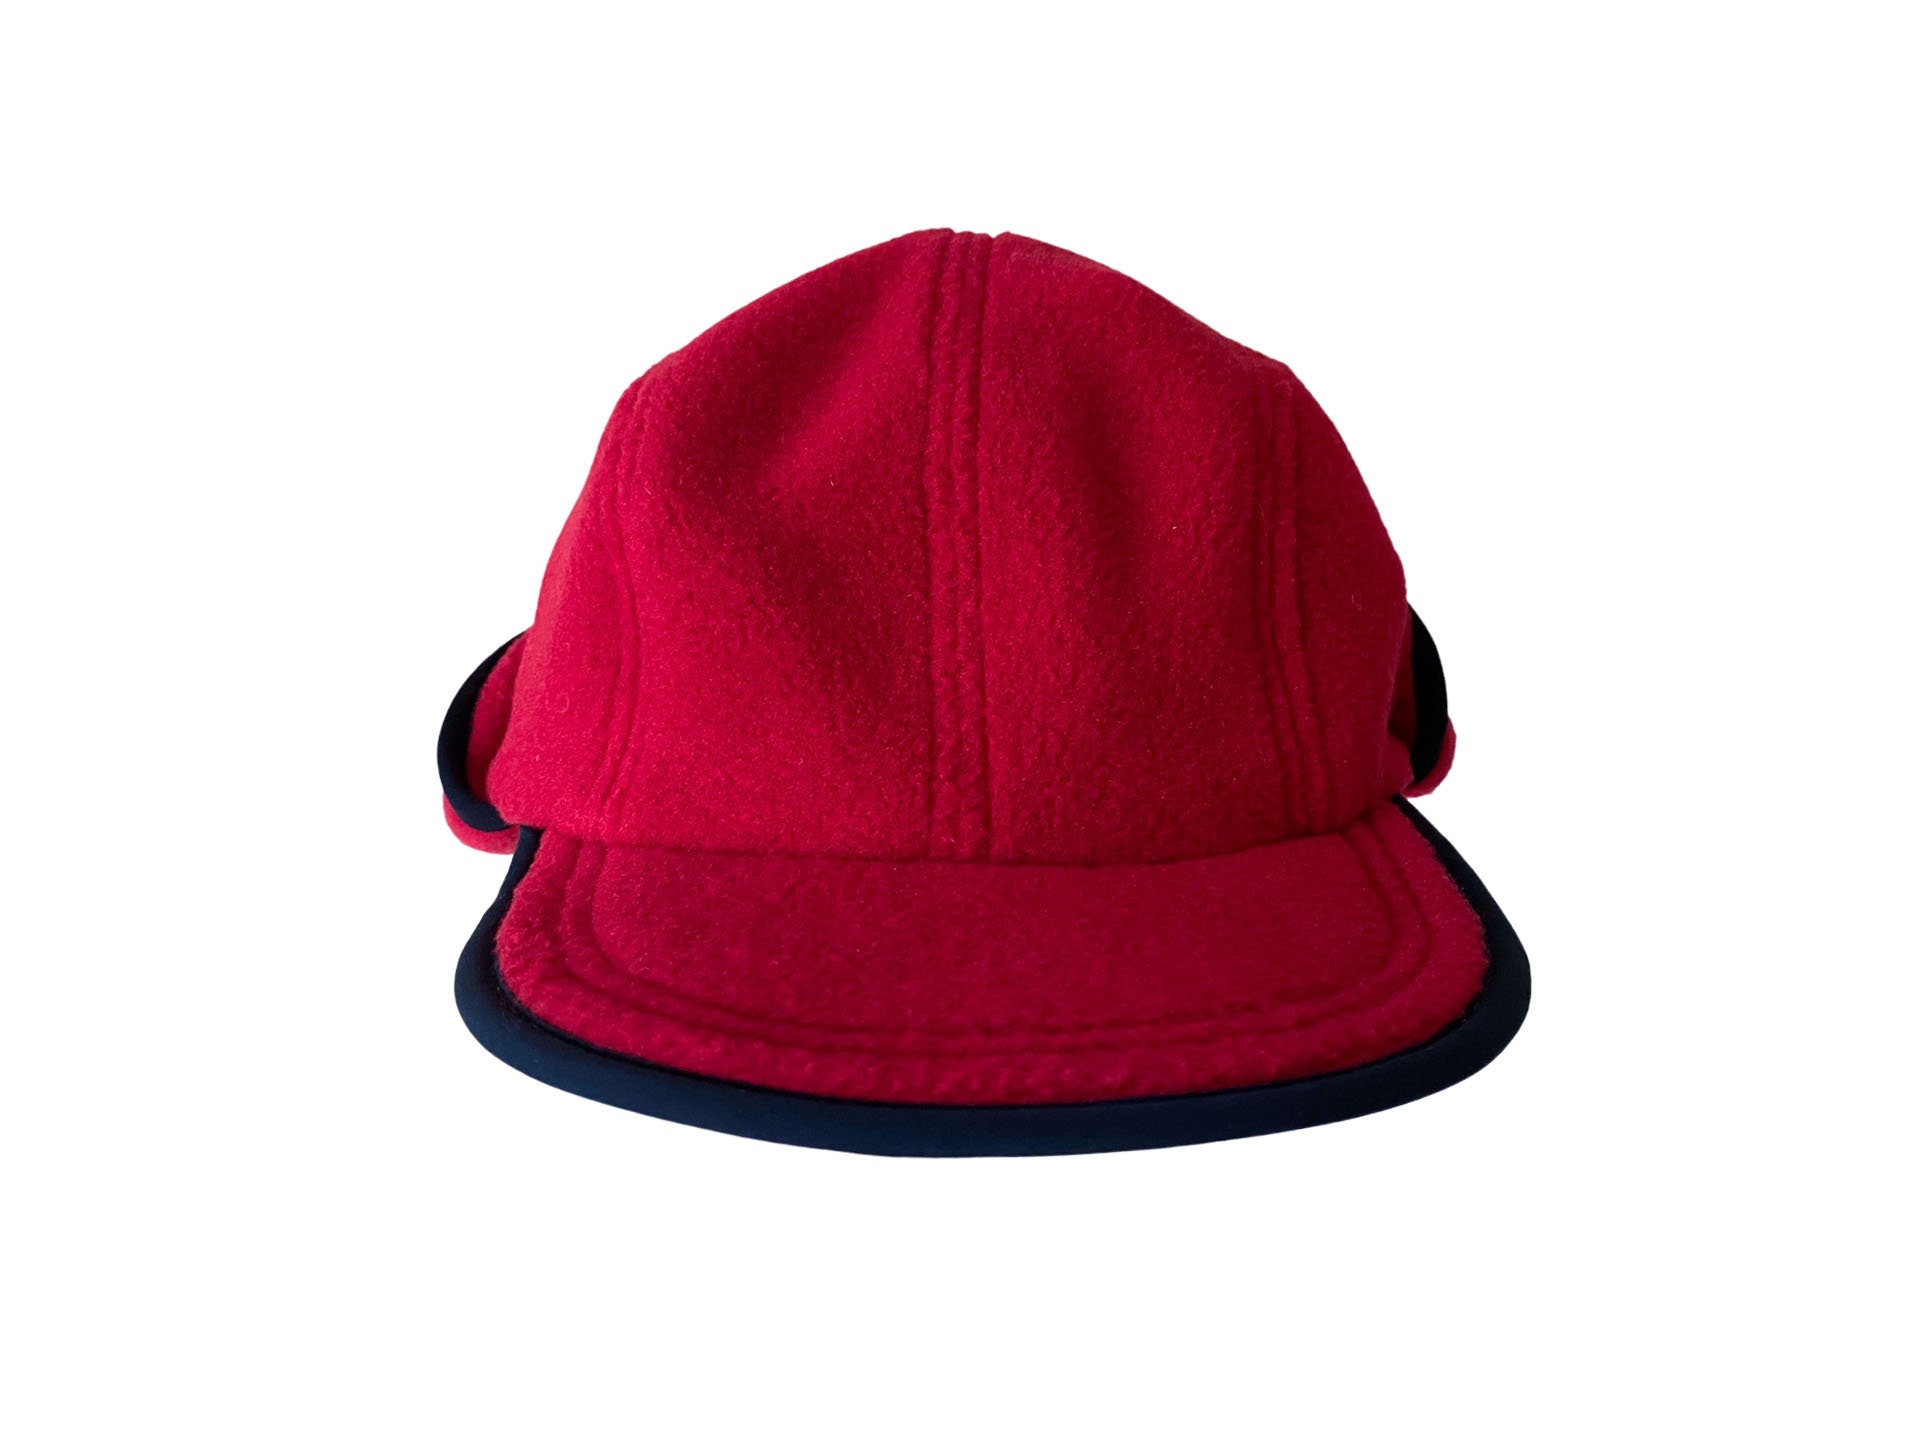 Cdet 1X Men Women Flat Cap Vintage Cabbie Driving Hat Beret Cap Duckbill Hat Adjustable Warm Peaked Hat 